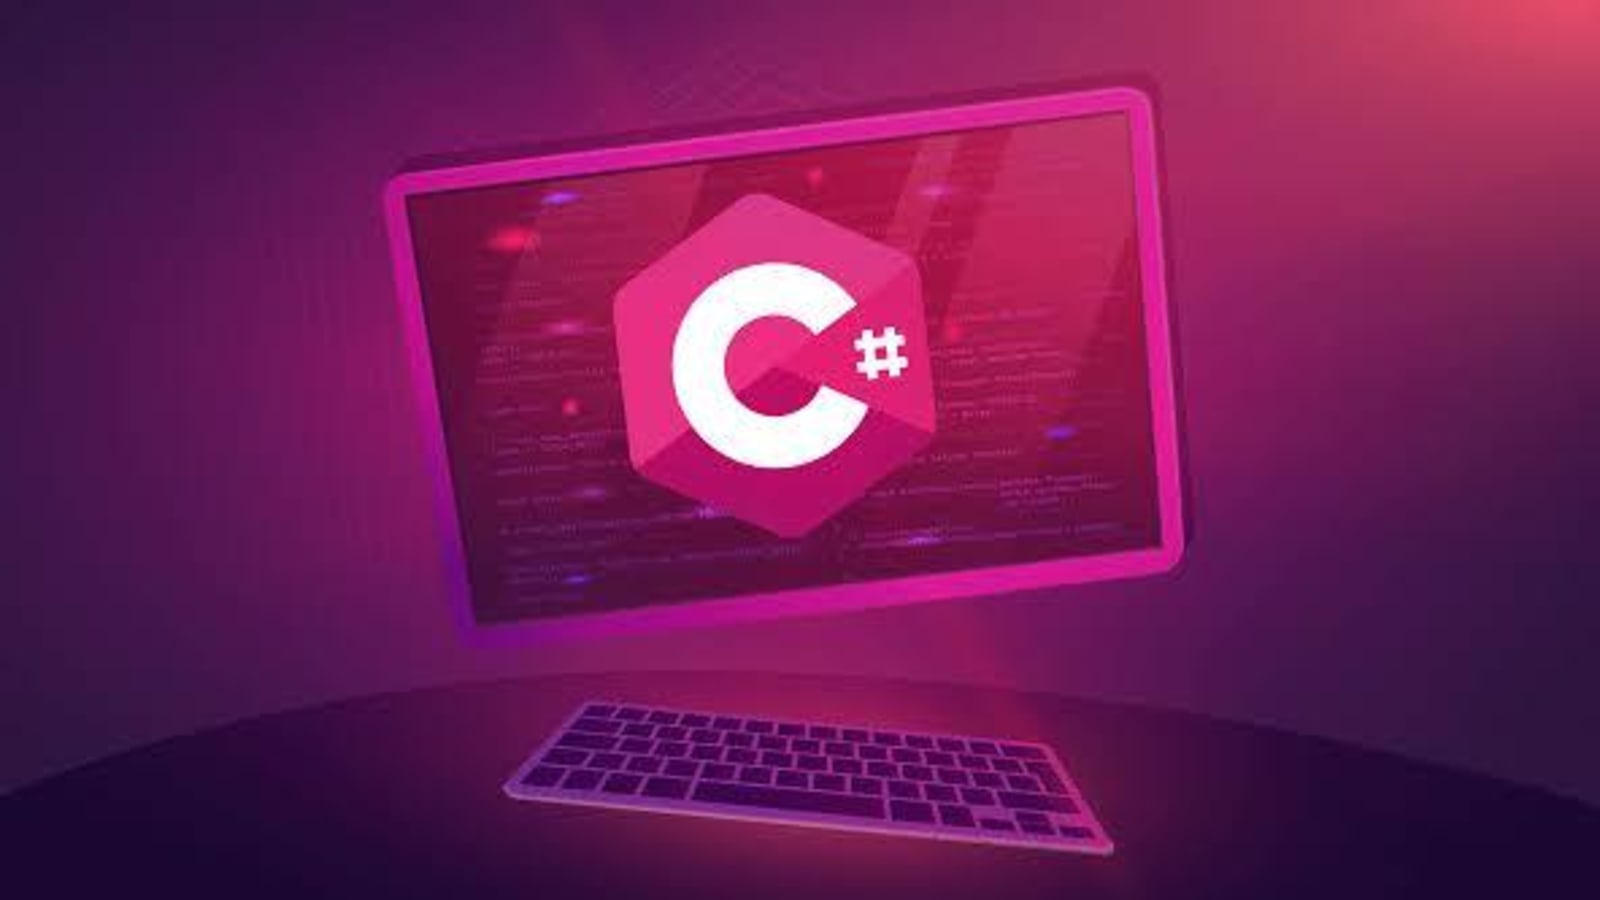 C# Programming - C# Programming, Wallpaper of the Week